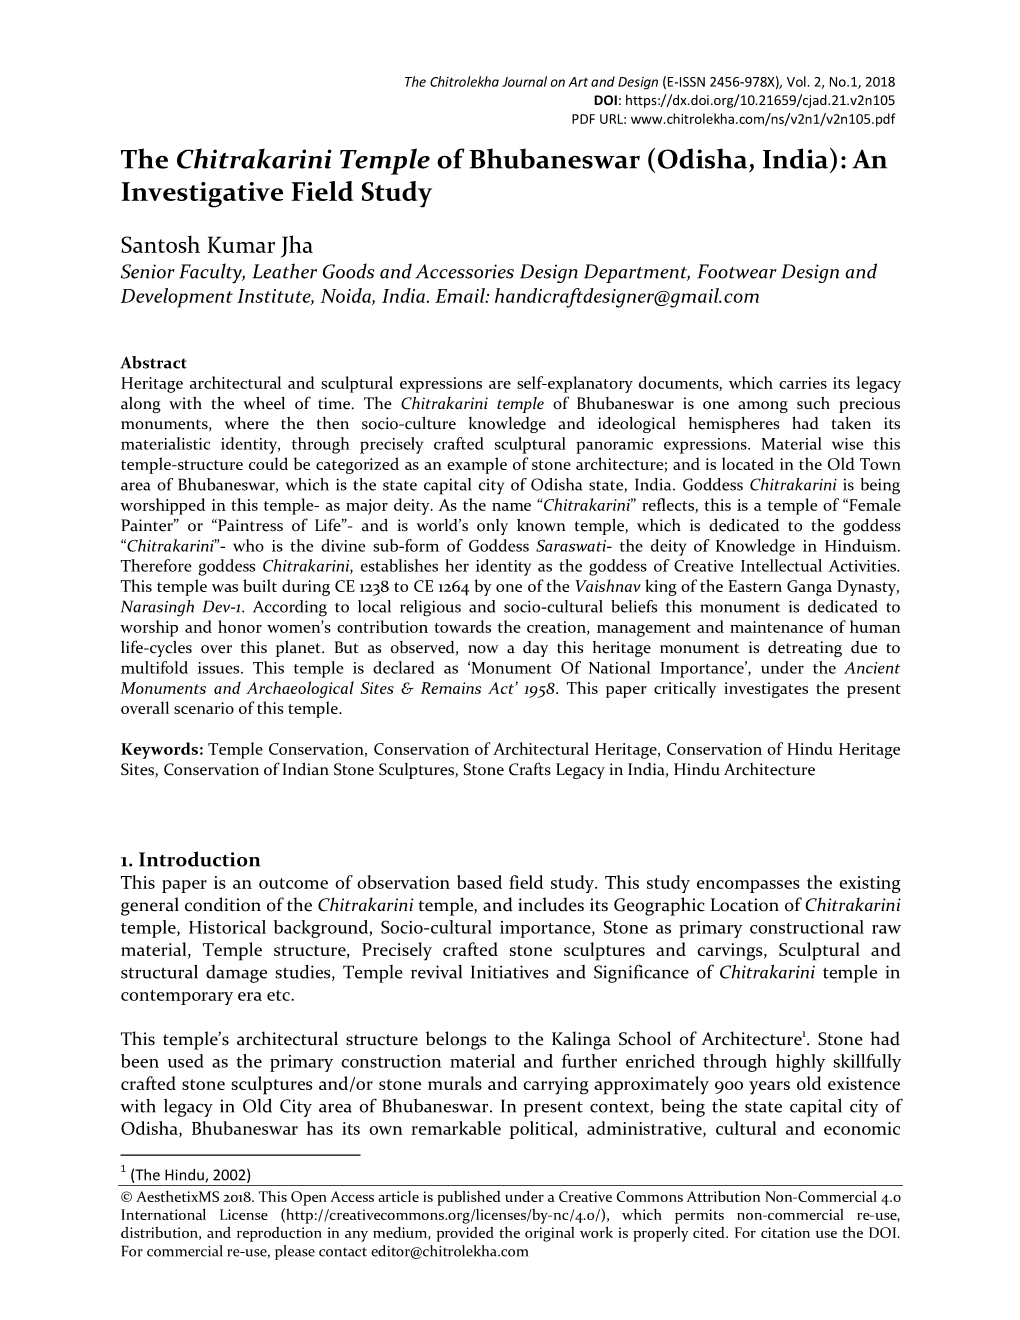 The Chitrakarini Temple of Bhubaneswar (Odisha, India): an Investigative Field Study